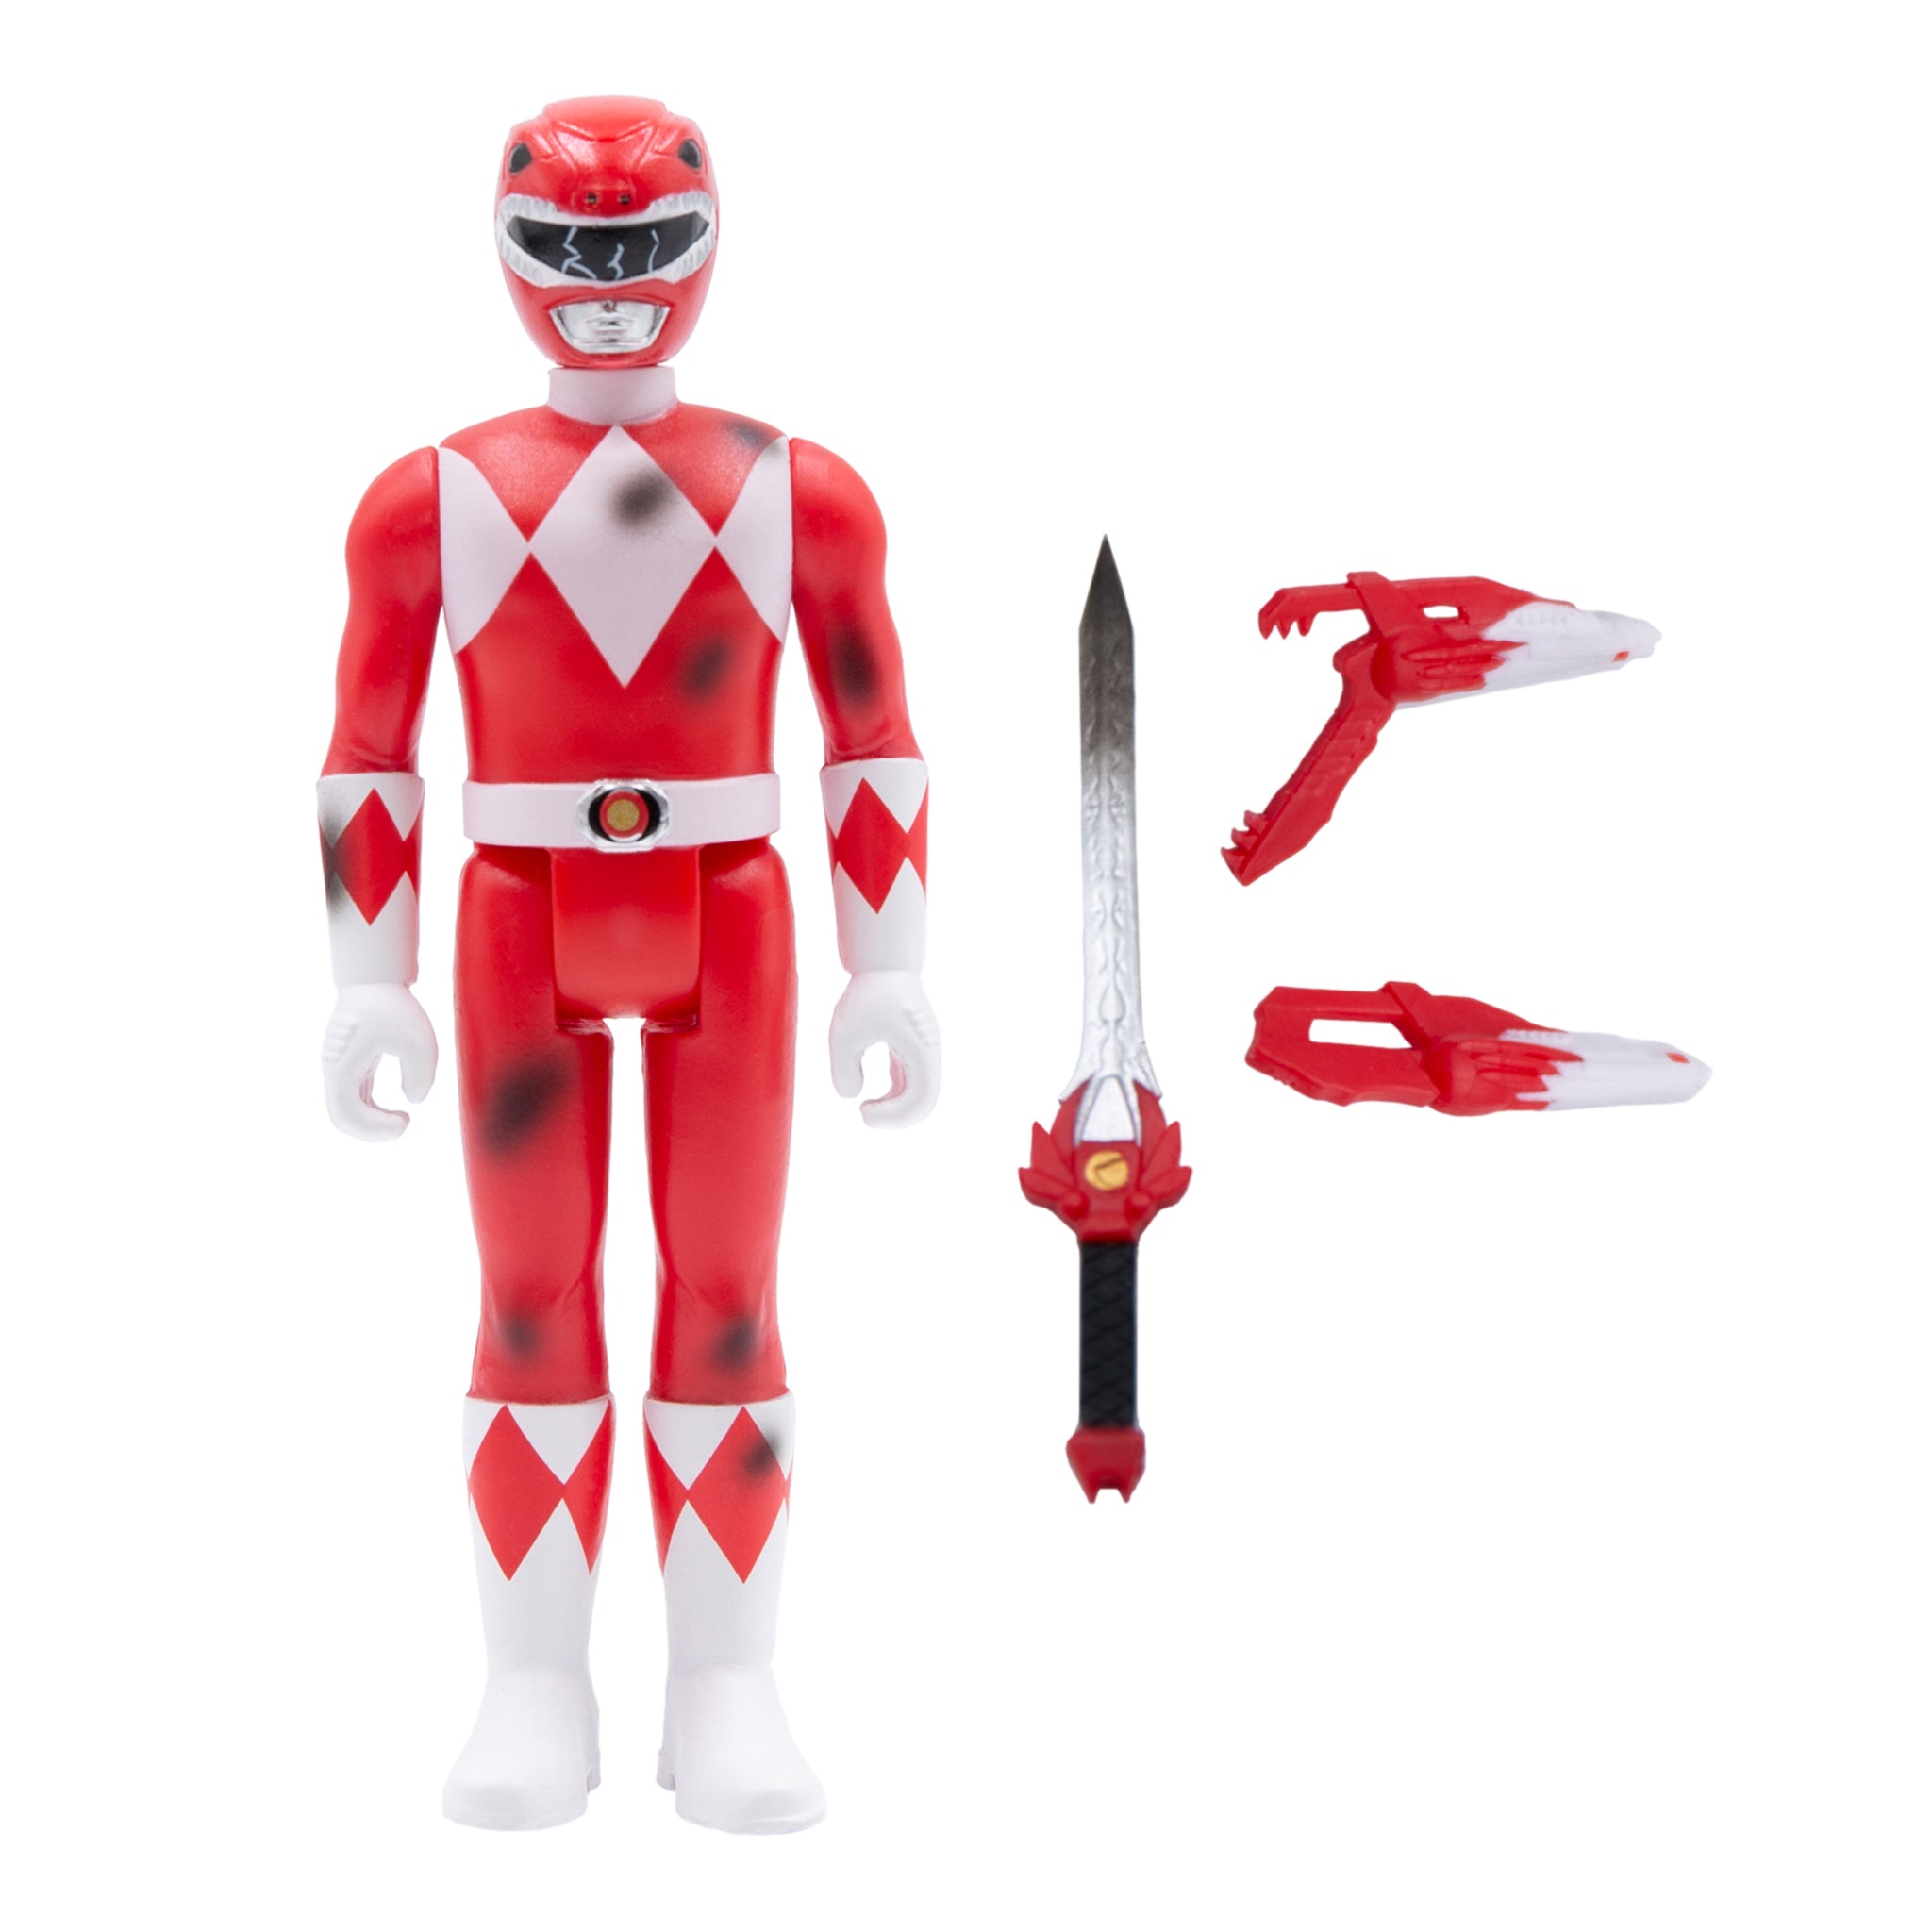 Mighty Morphin' Power Rangers Reaction Figure - Red Ranger (Battle Damaged)